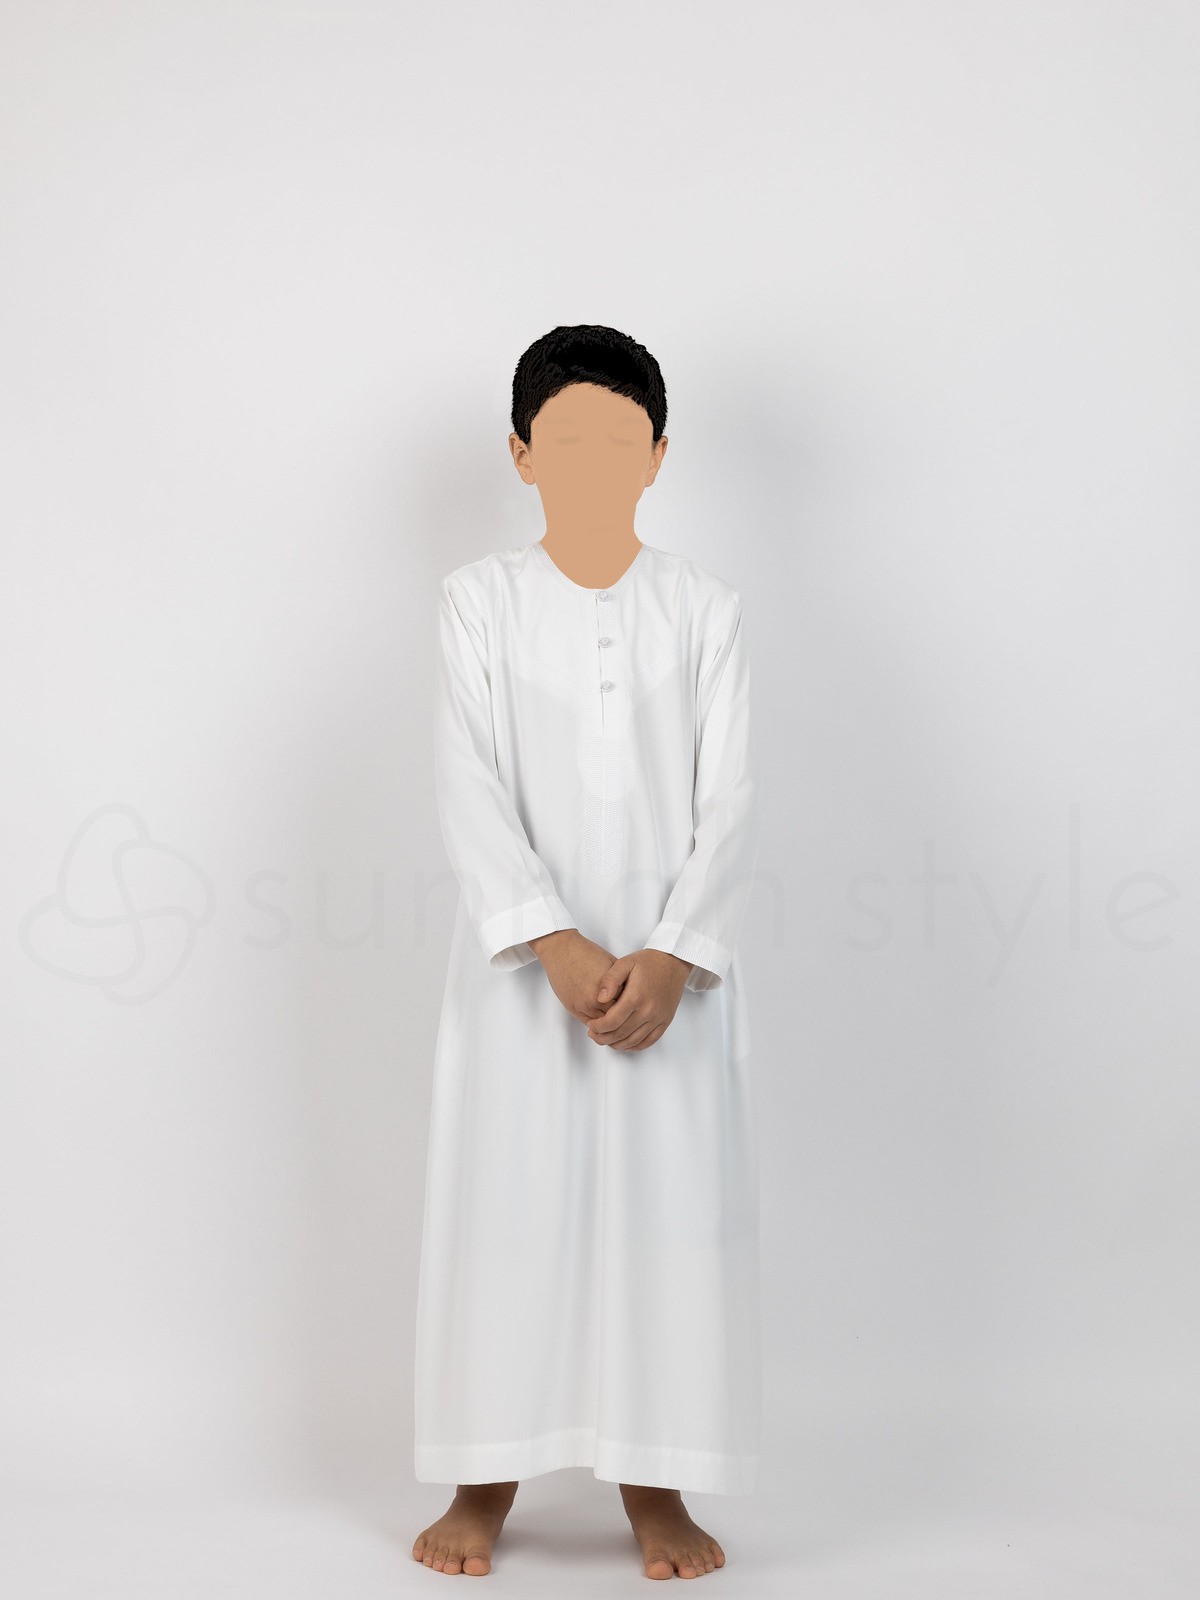 Sunnah Style - Boys Omani Embroidered Thobe - Child (White)